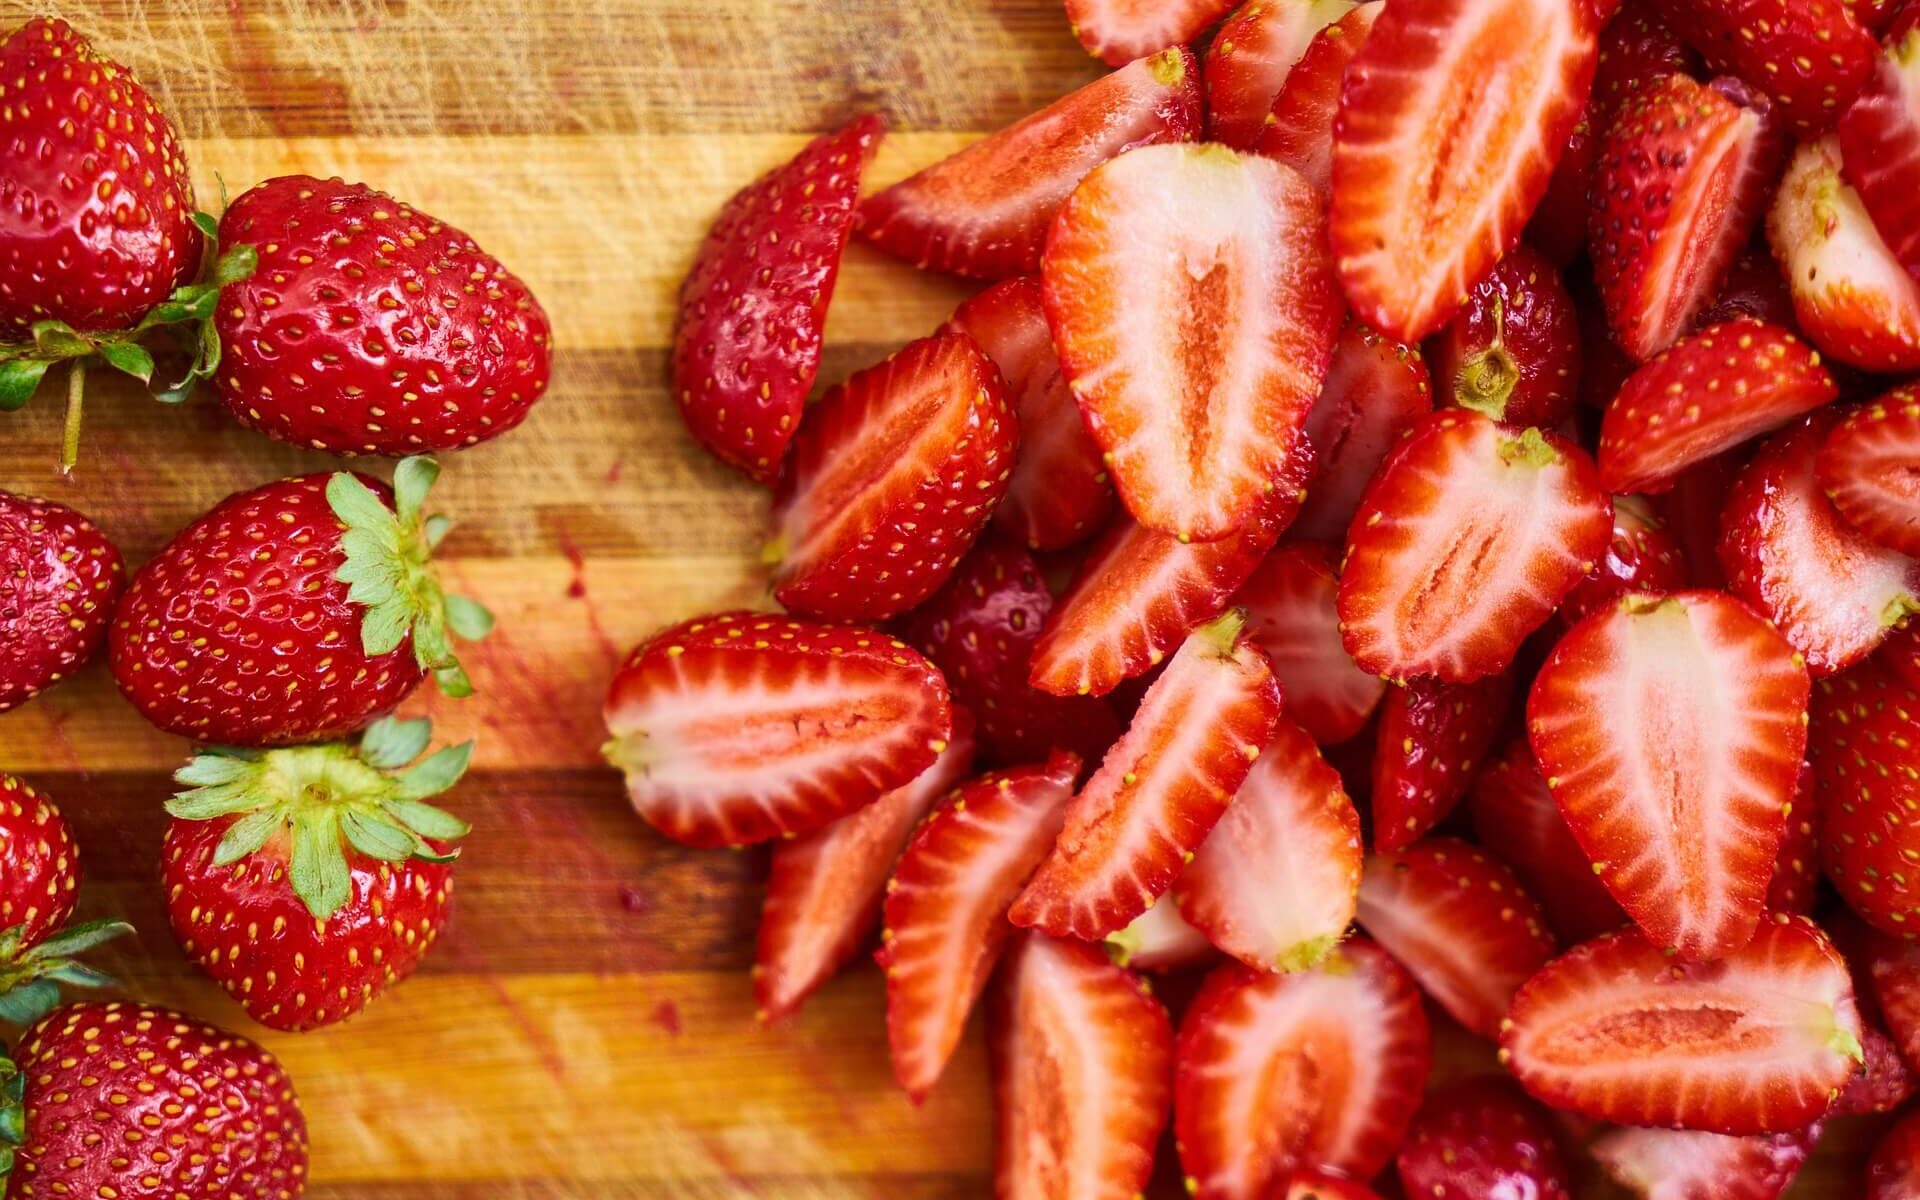 health benefits of eating strawberries